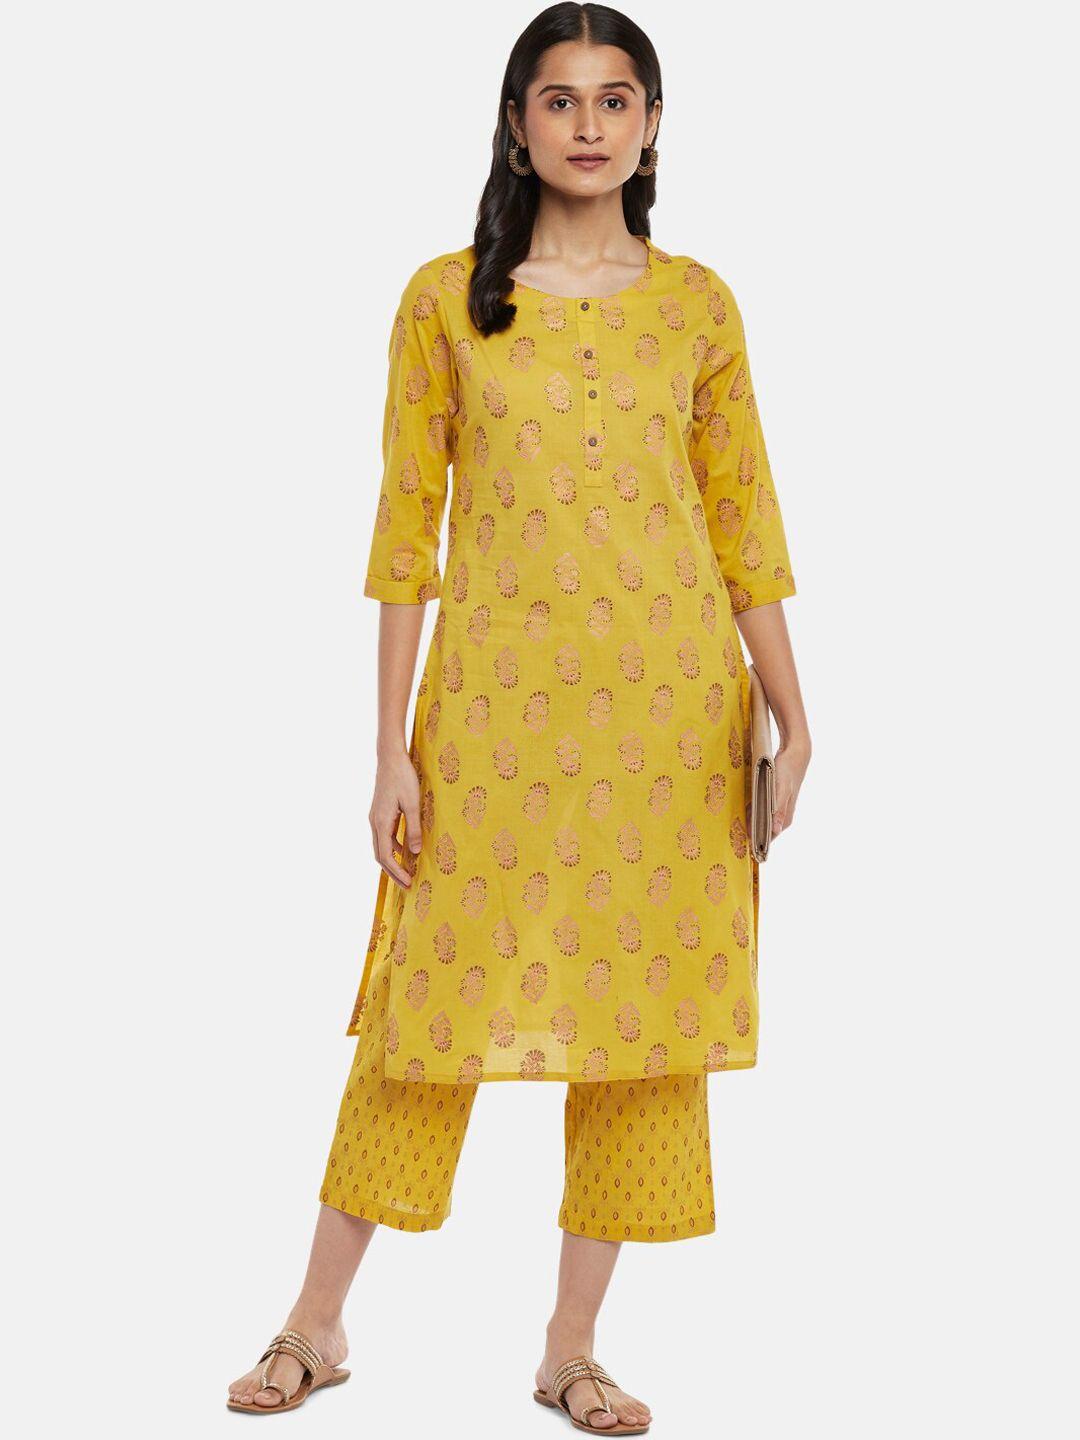 rangmanch by pantaloons women yellow printed pure cotton kurti with trousers